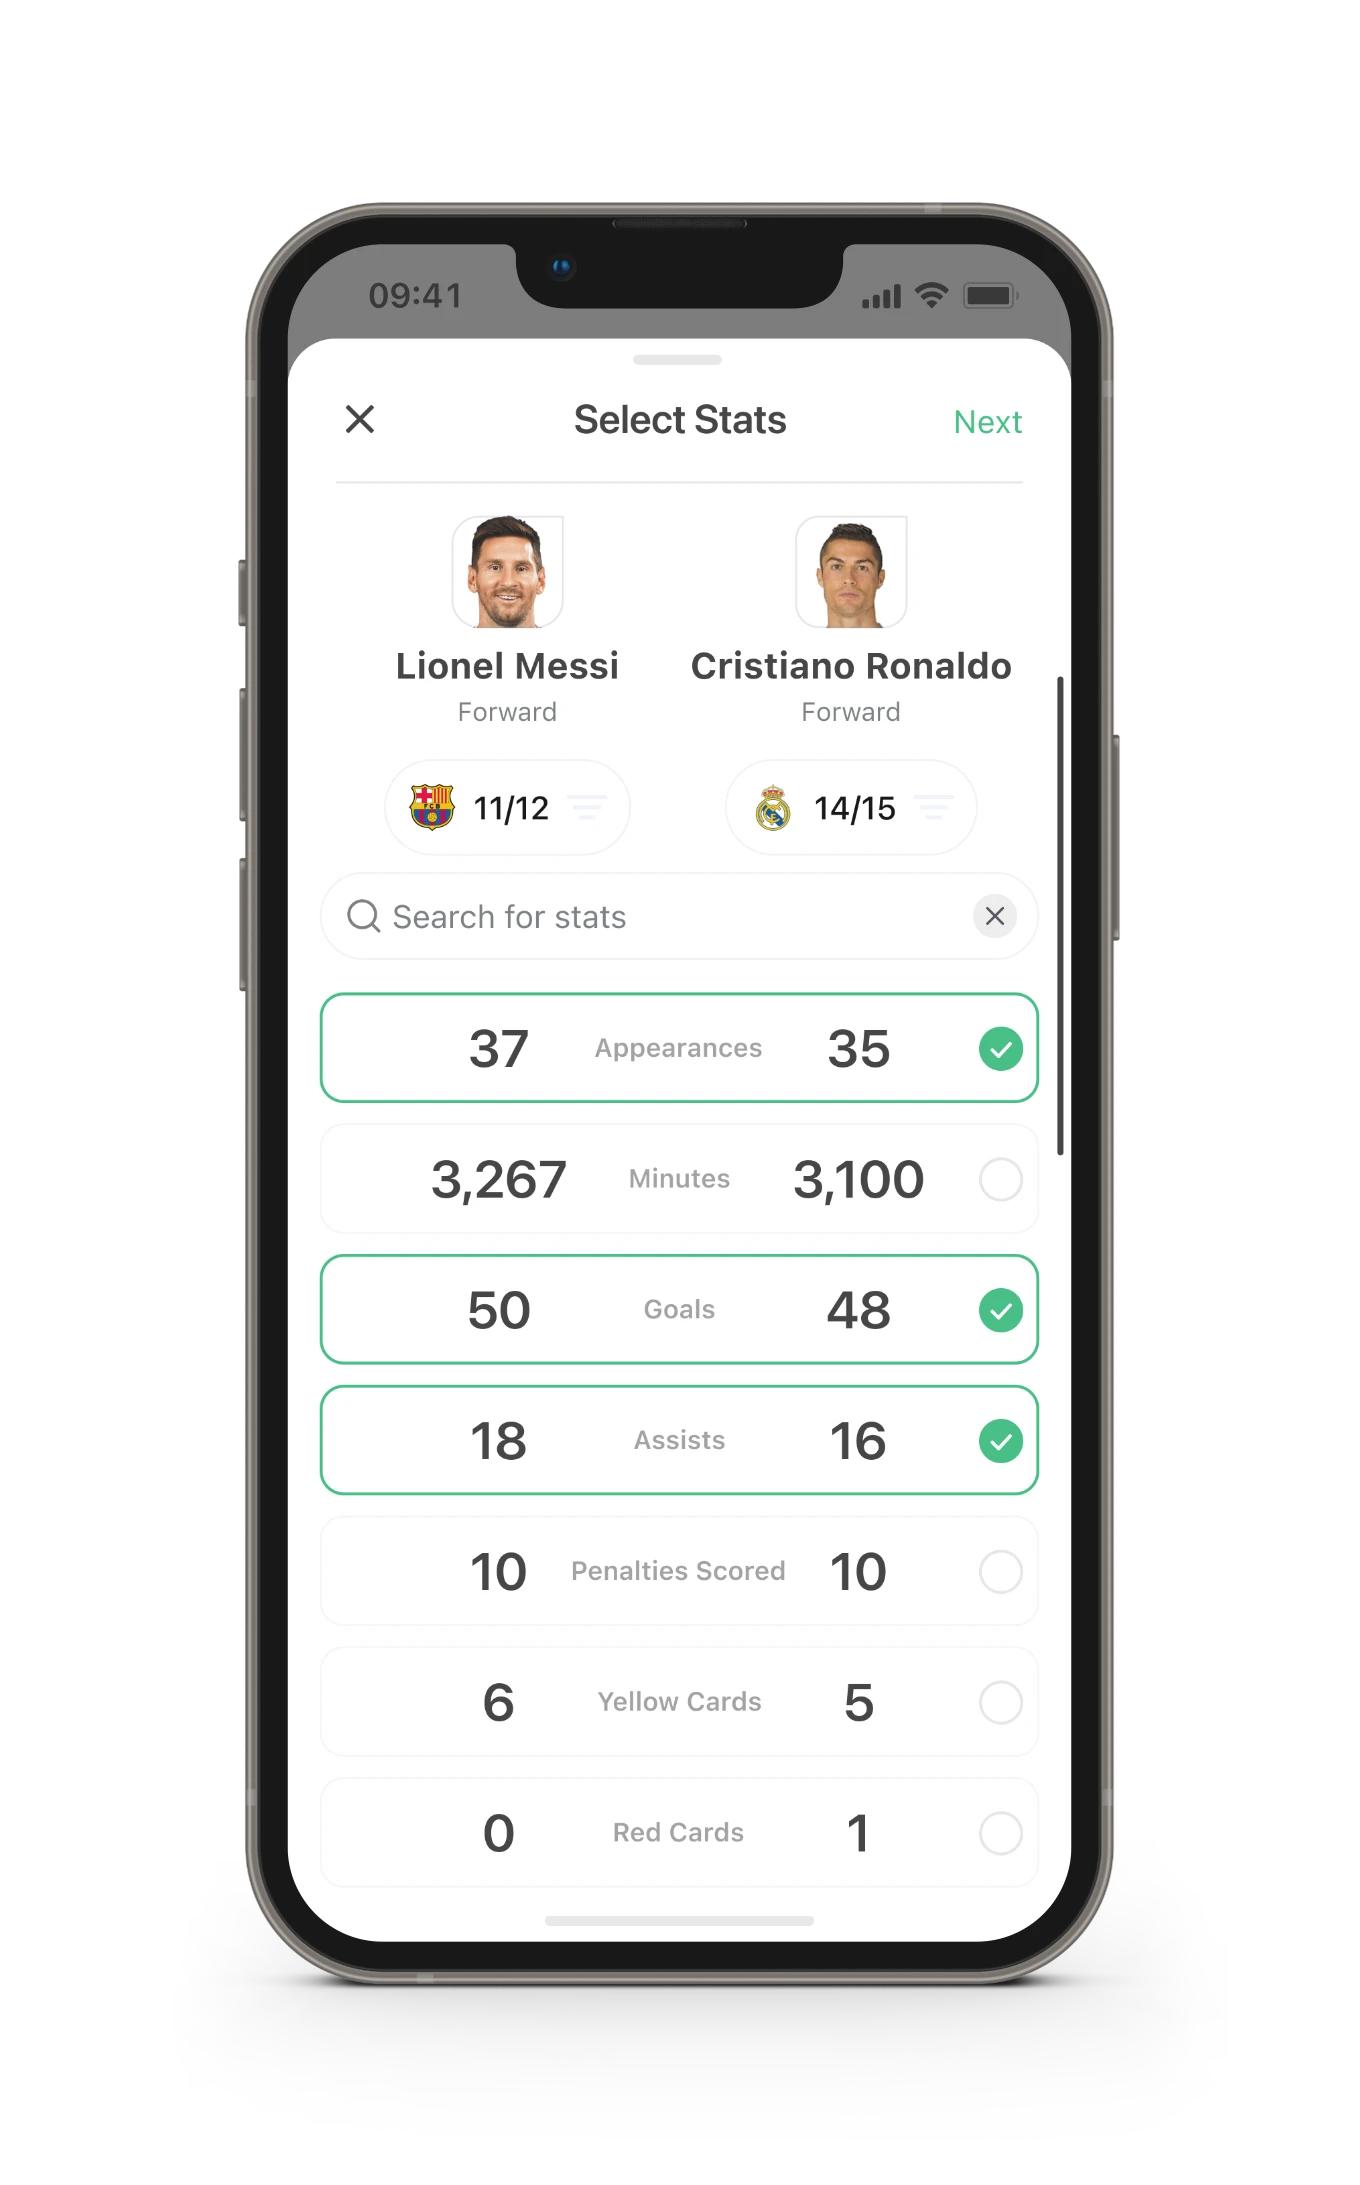 A screen comparing the stats of Lionel Messi and Cristiano Ronaldo